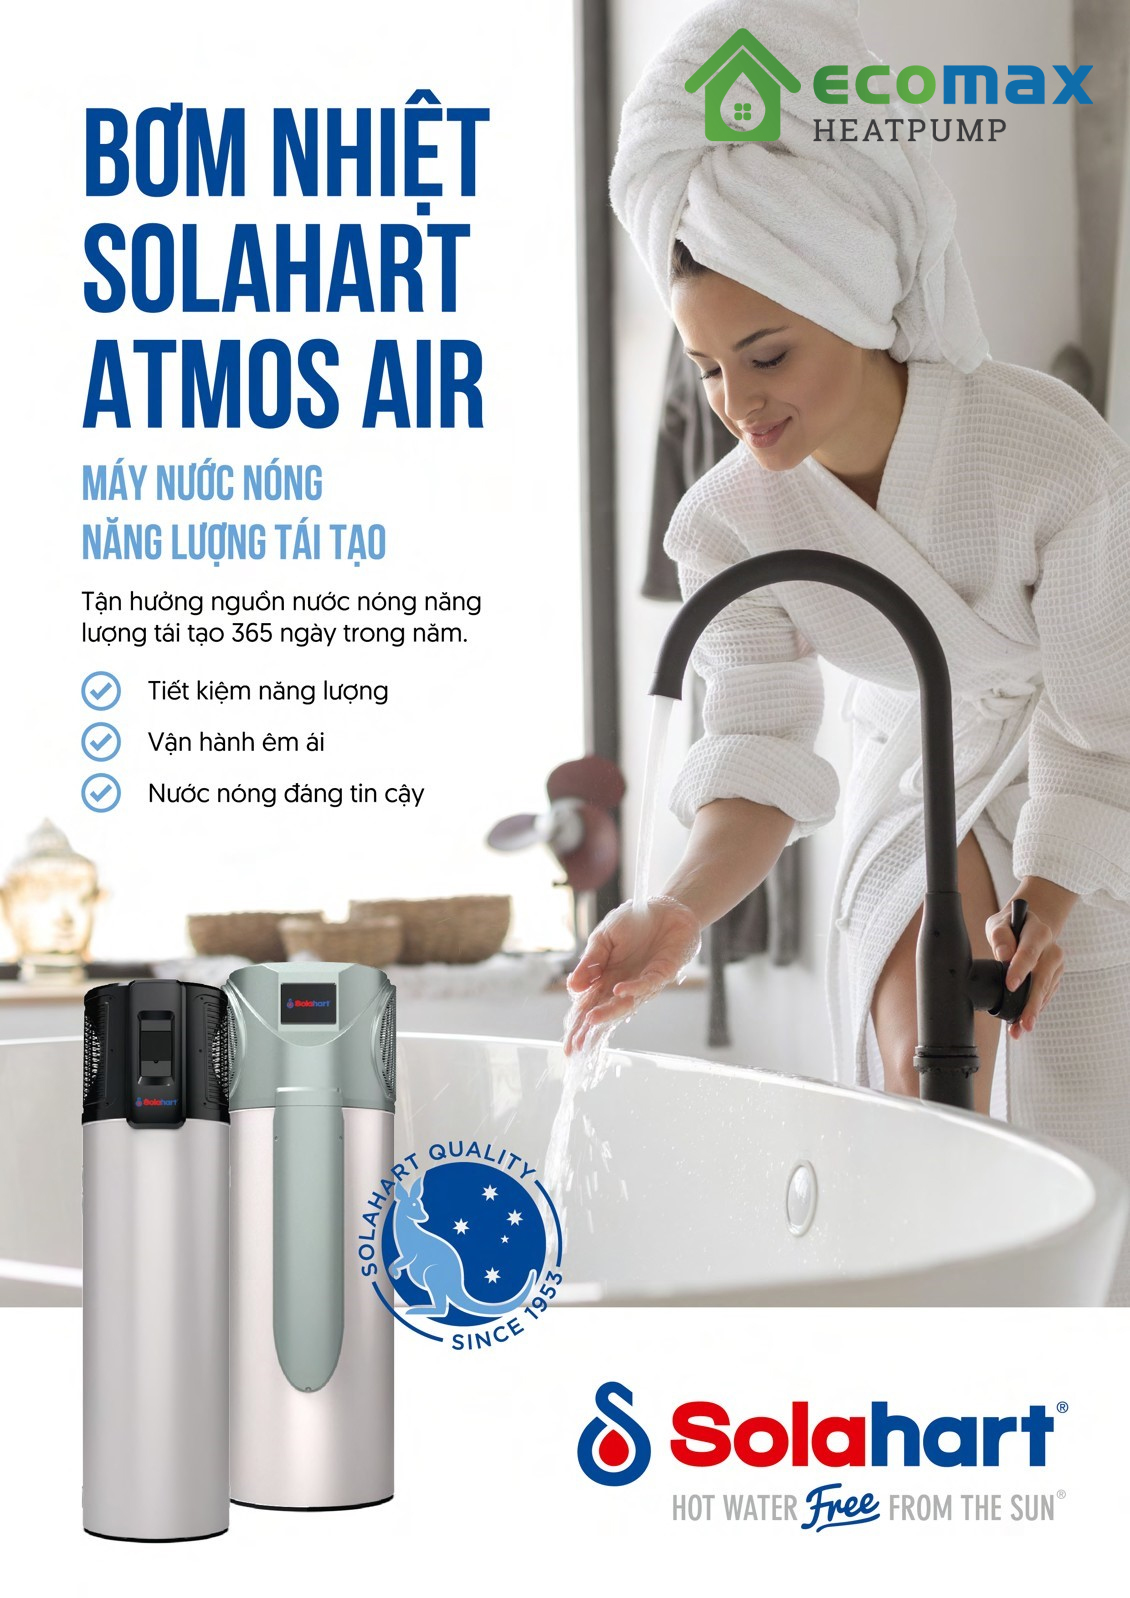 brochure may nuoc nong bom nhiet heat pump solahart atmos air 270lit